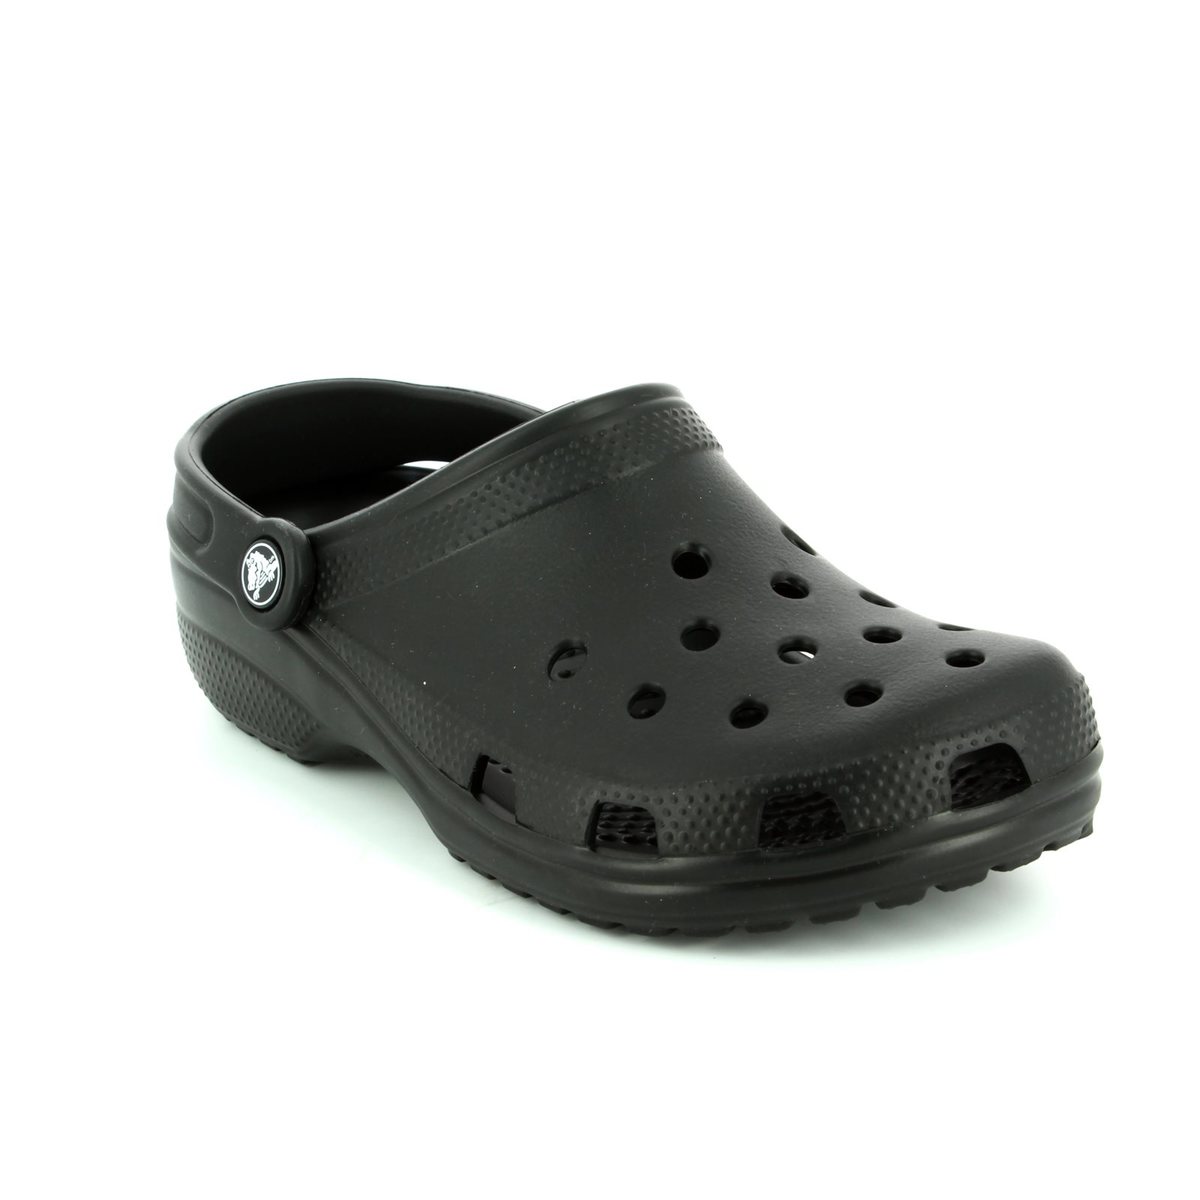 sahara shoes crocs